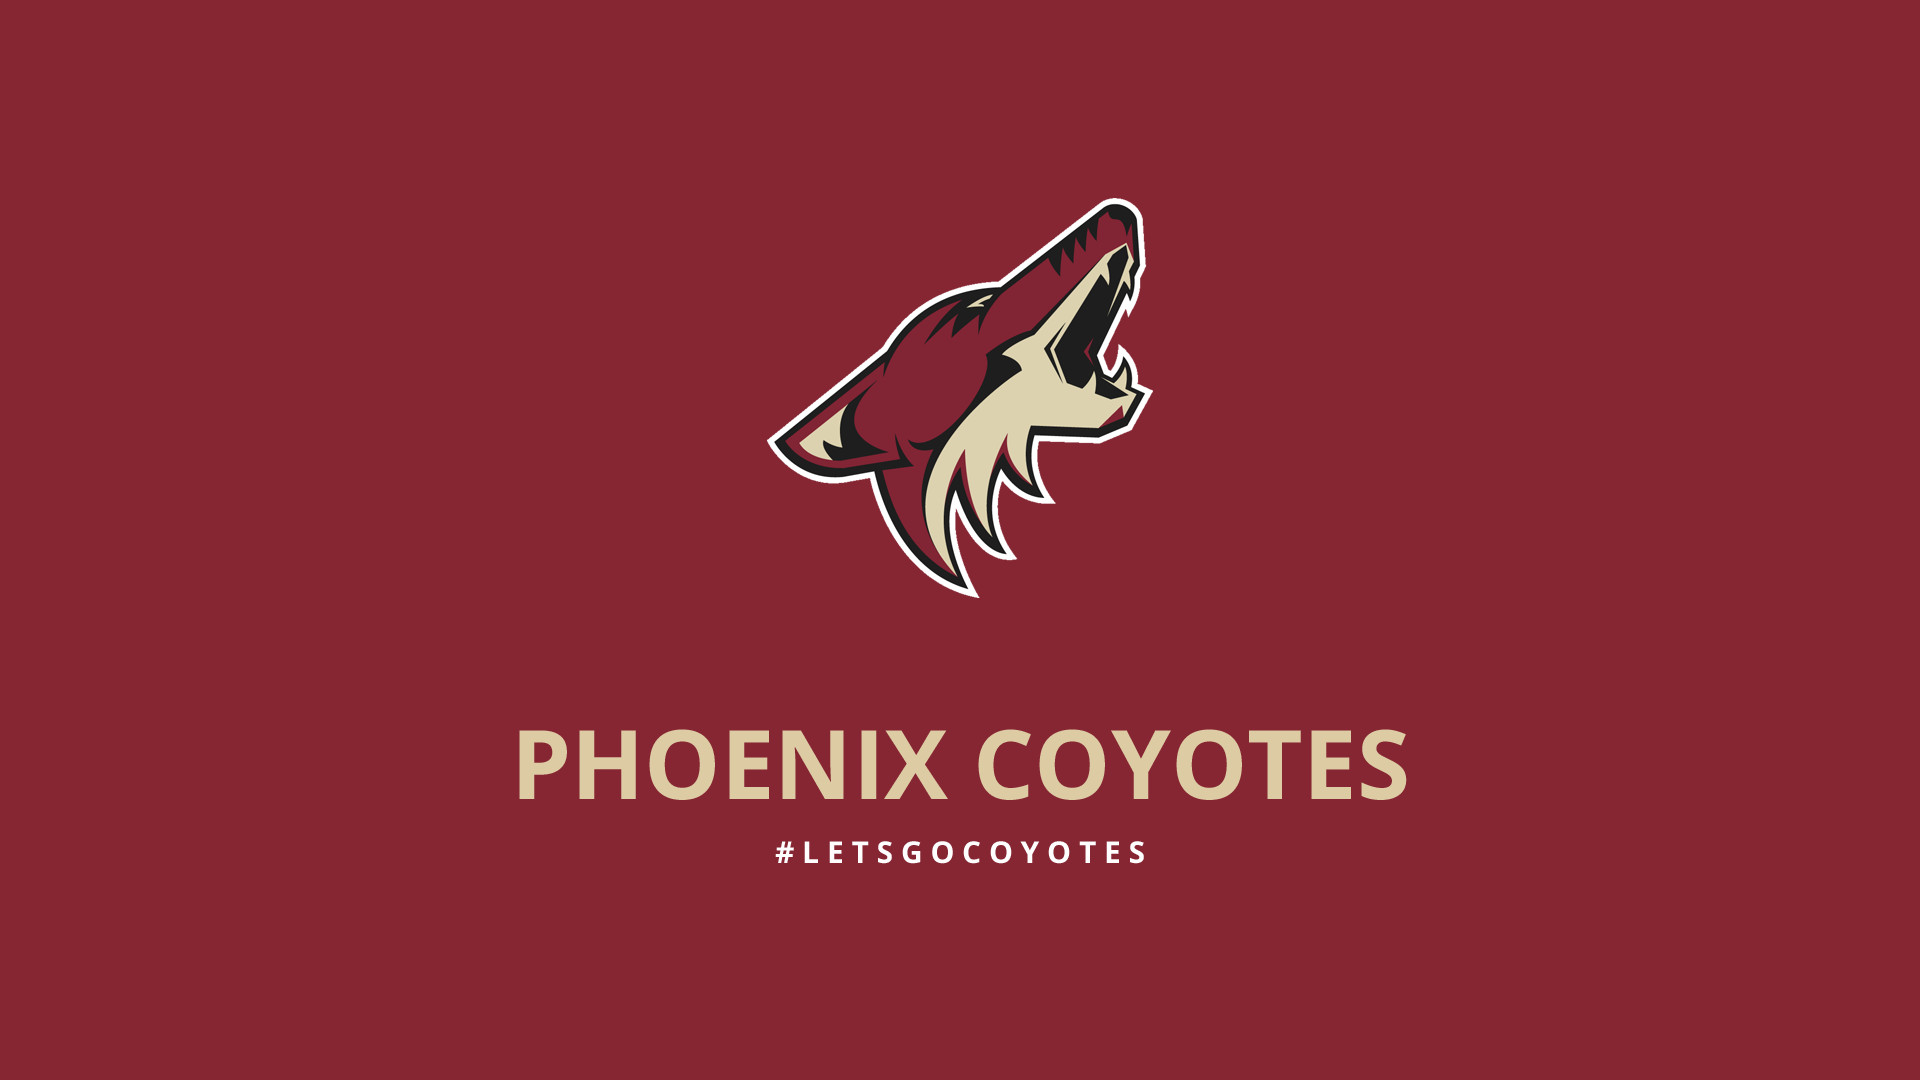 1920x1080 Download Fullsize Image Â· nhl phoenix coyotes wallpaper ...